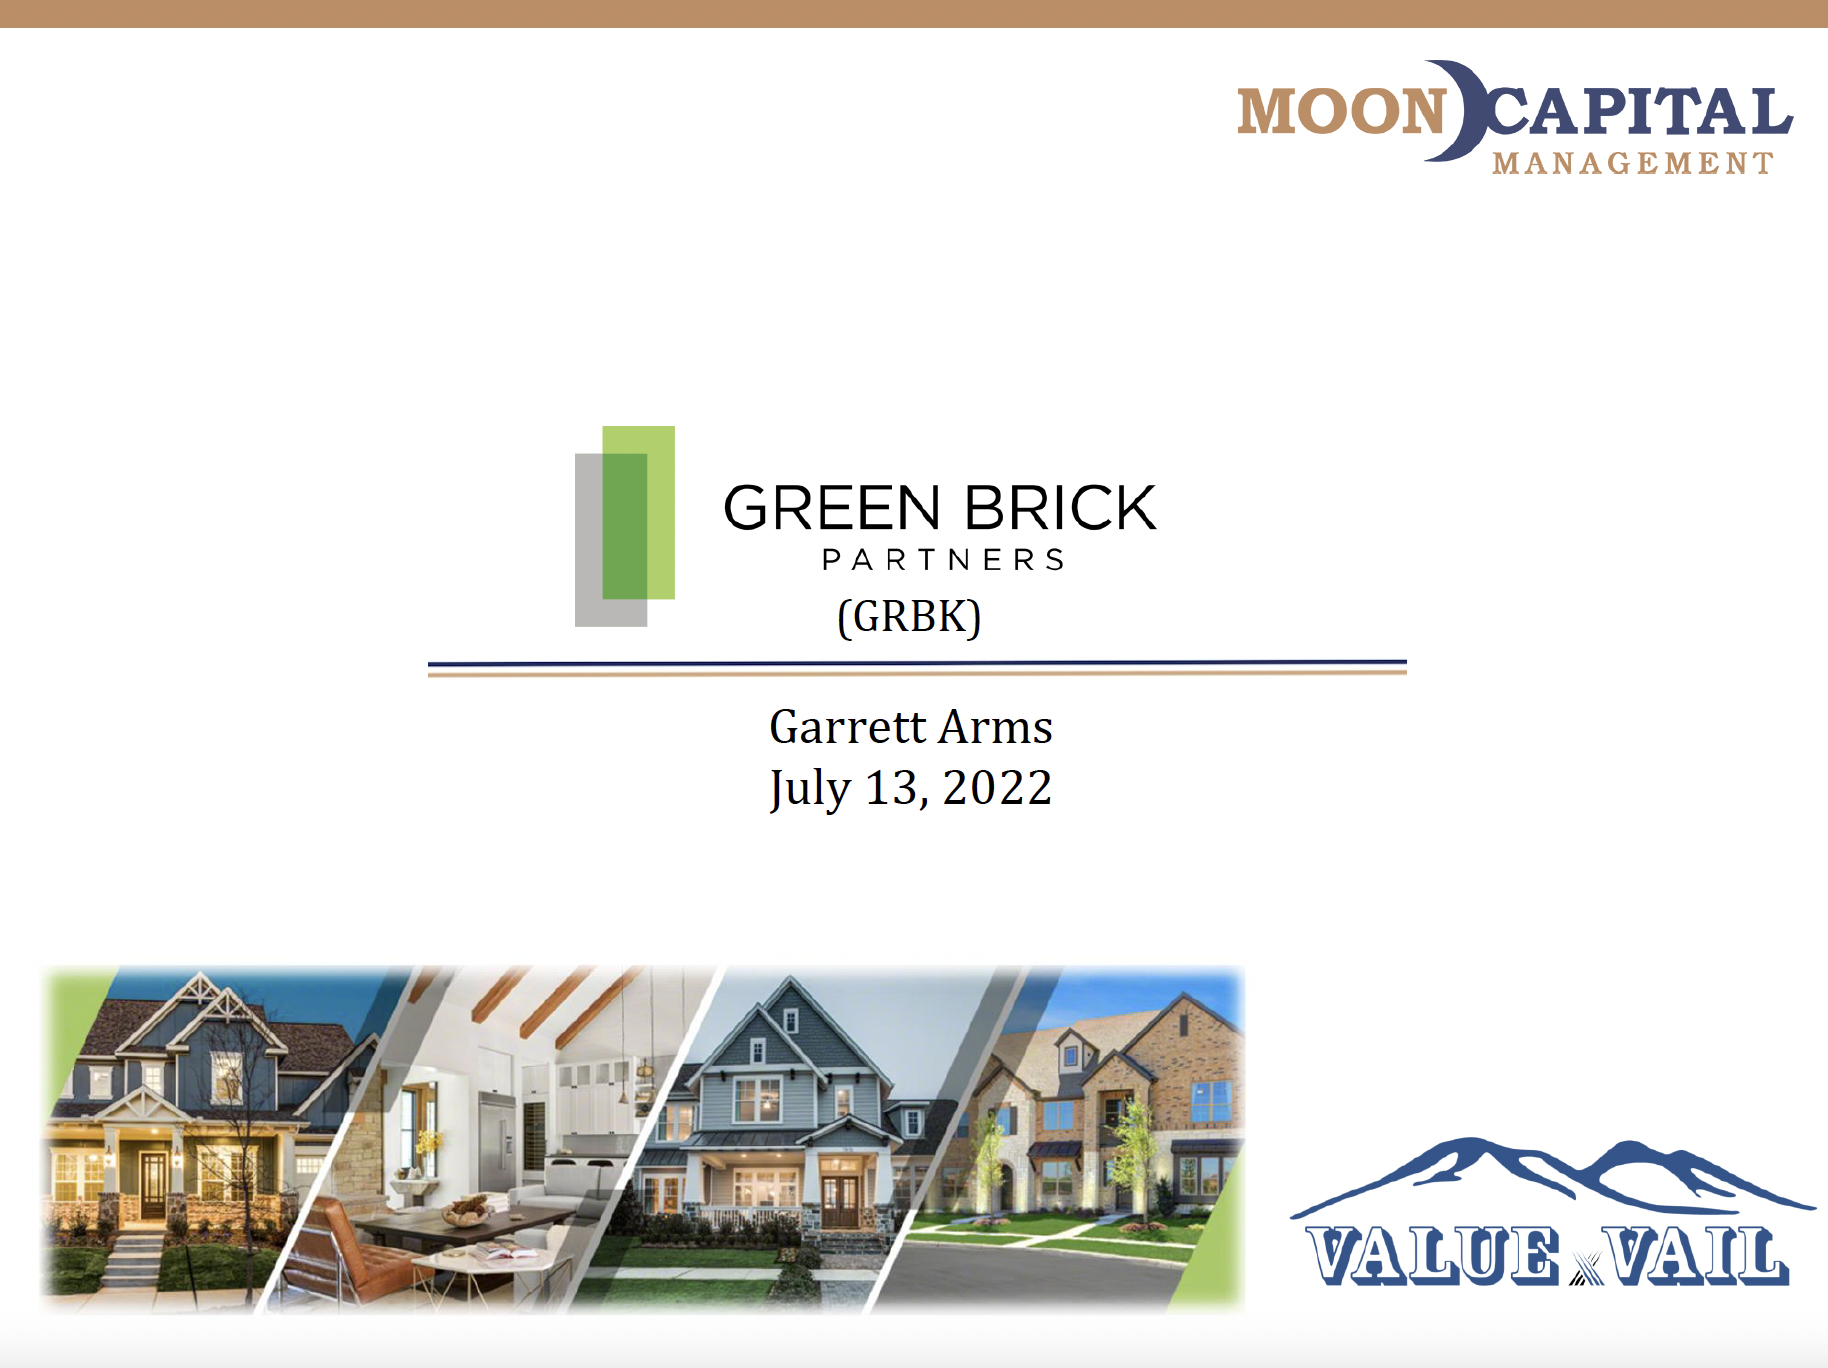 Green Brick Partners (GRBK) - ValueXVail 2022